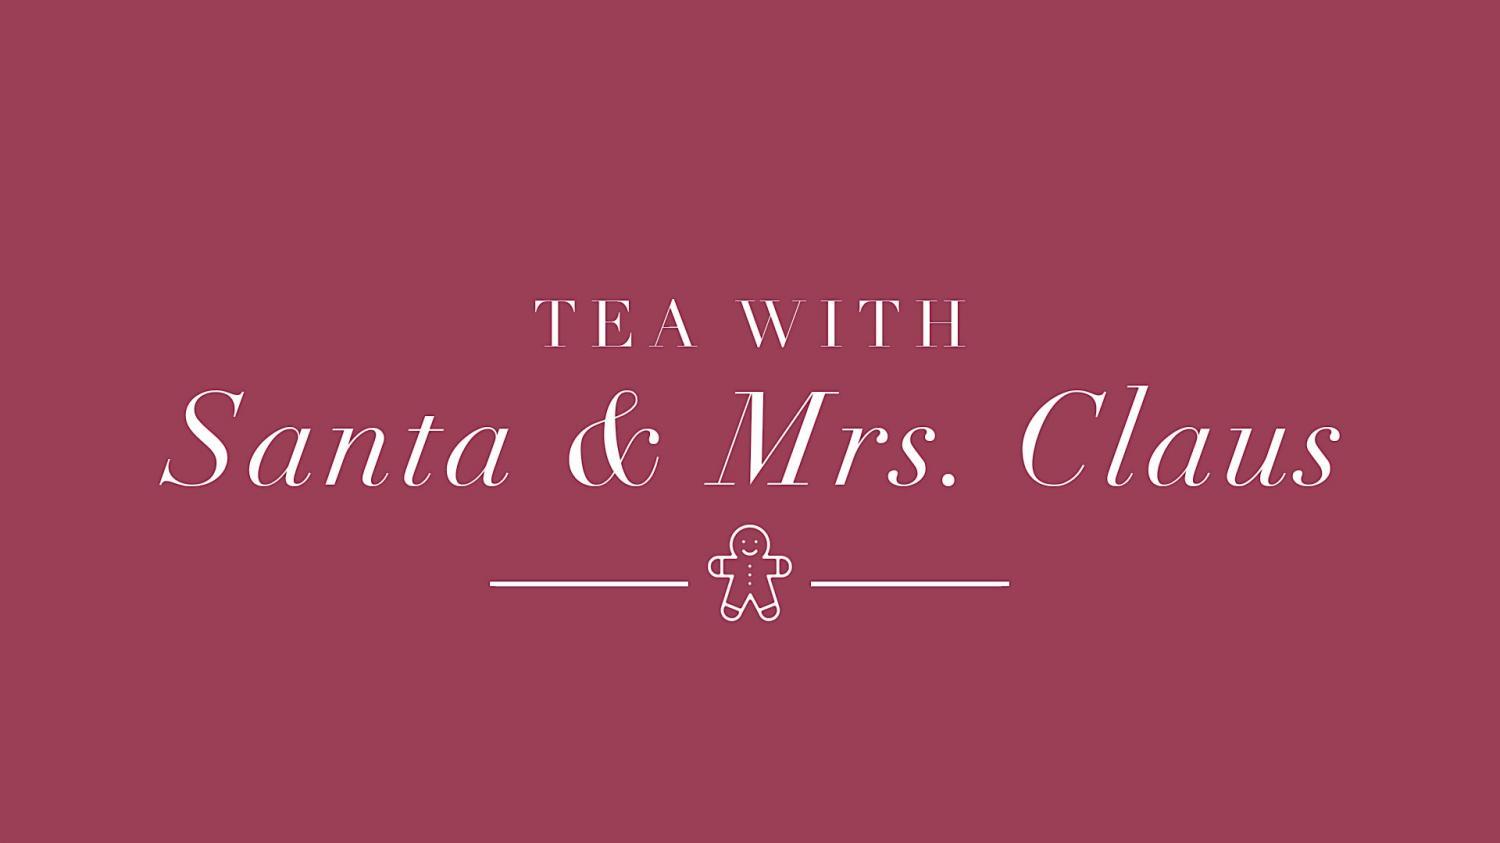 Tea with Santa and Mrs. Claus
Sat Dec 10, 11:00 AM - Sat Dec 10, 12:30 PM
in 36 days